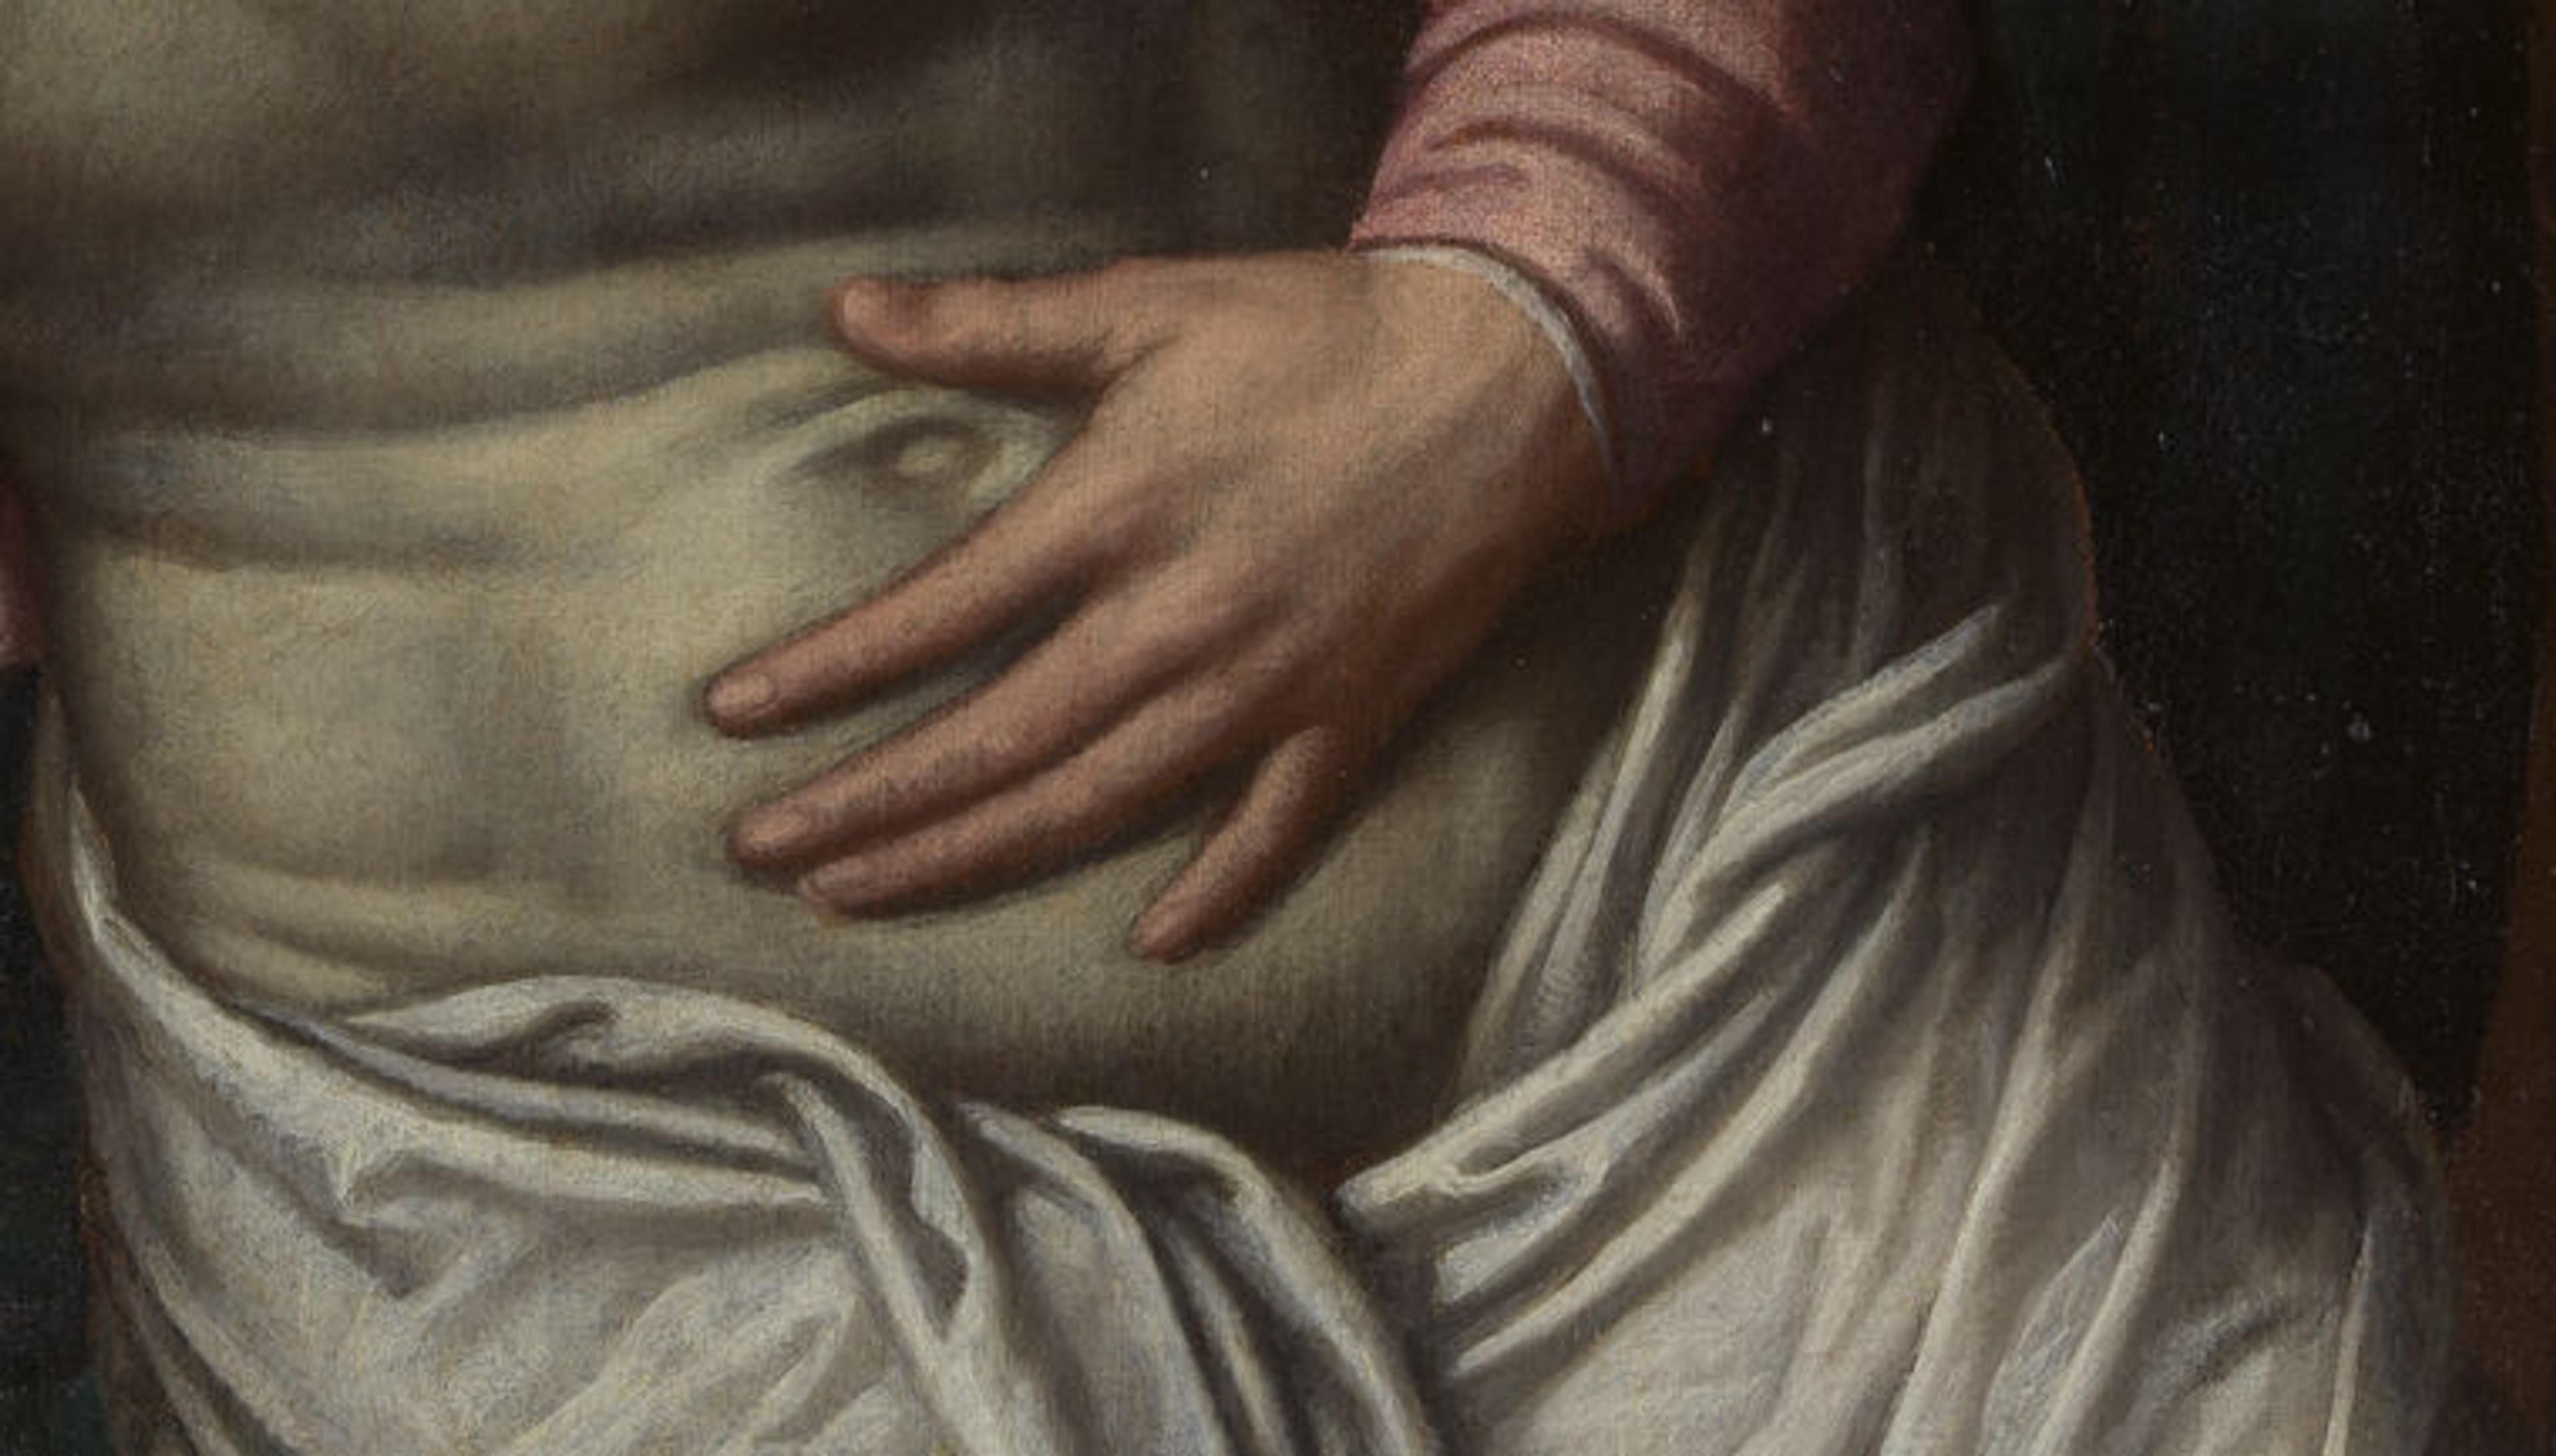 Detail view of Moretto da Brescia's Entombment scene, showing the Virgin Mary's hands on Christ's abdomen